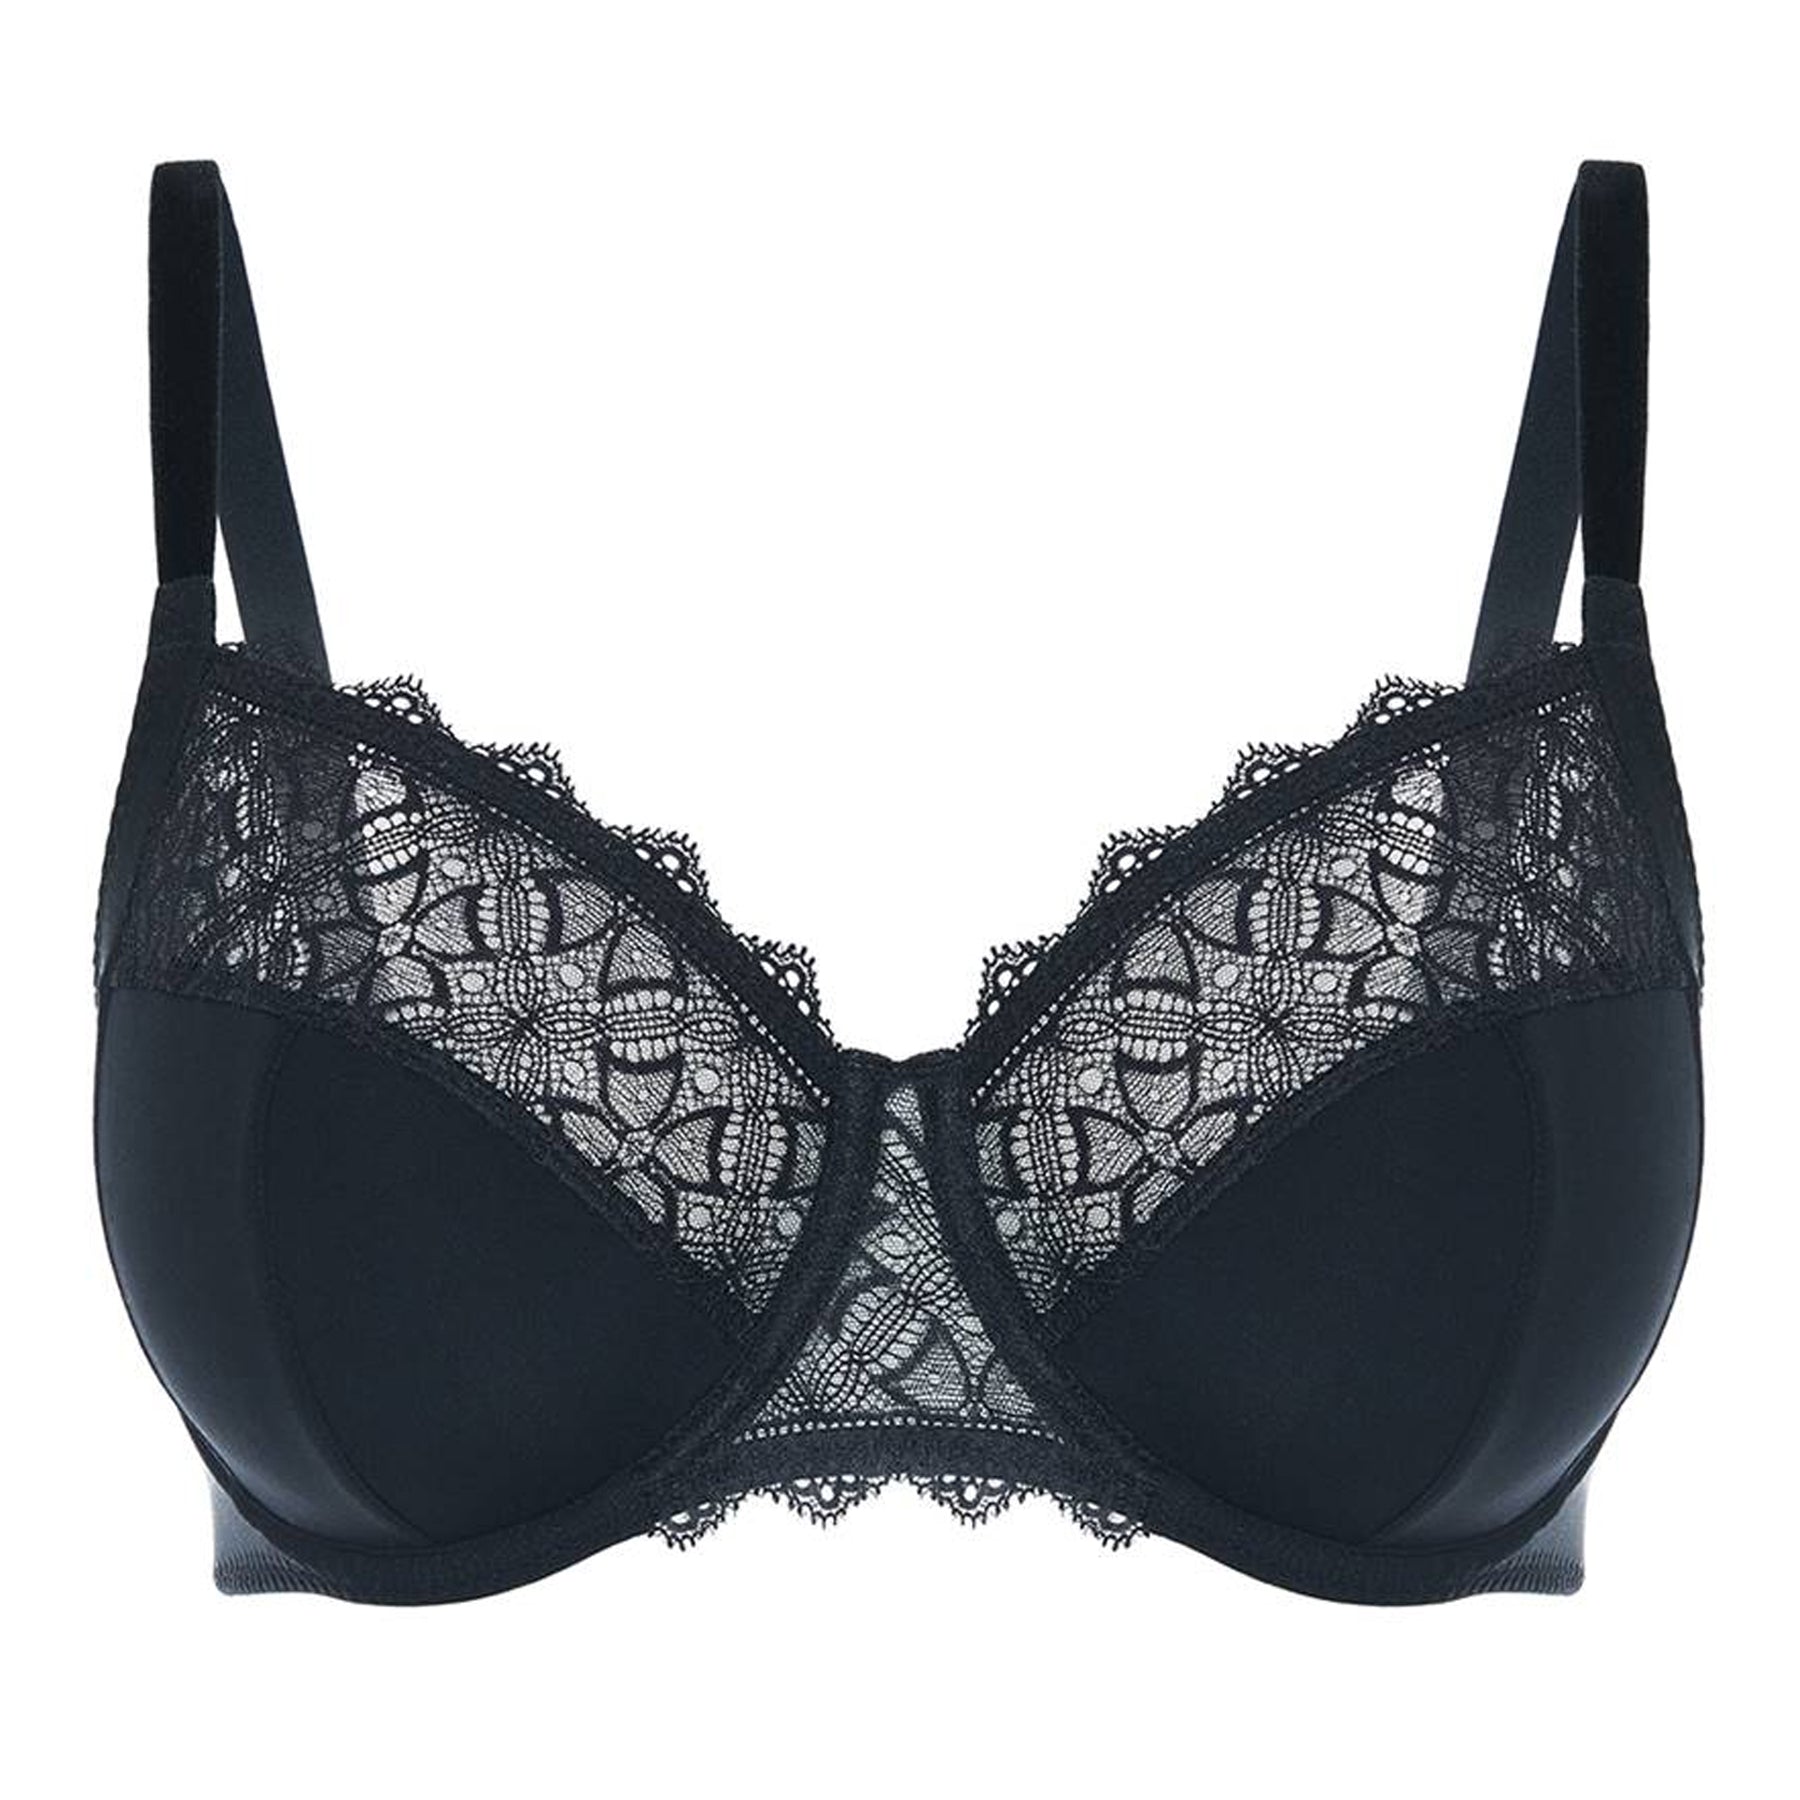 Cacique blue, black & white geometric bra 44D Size undefined - $20 - From  Lori